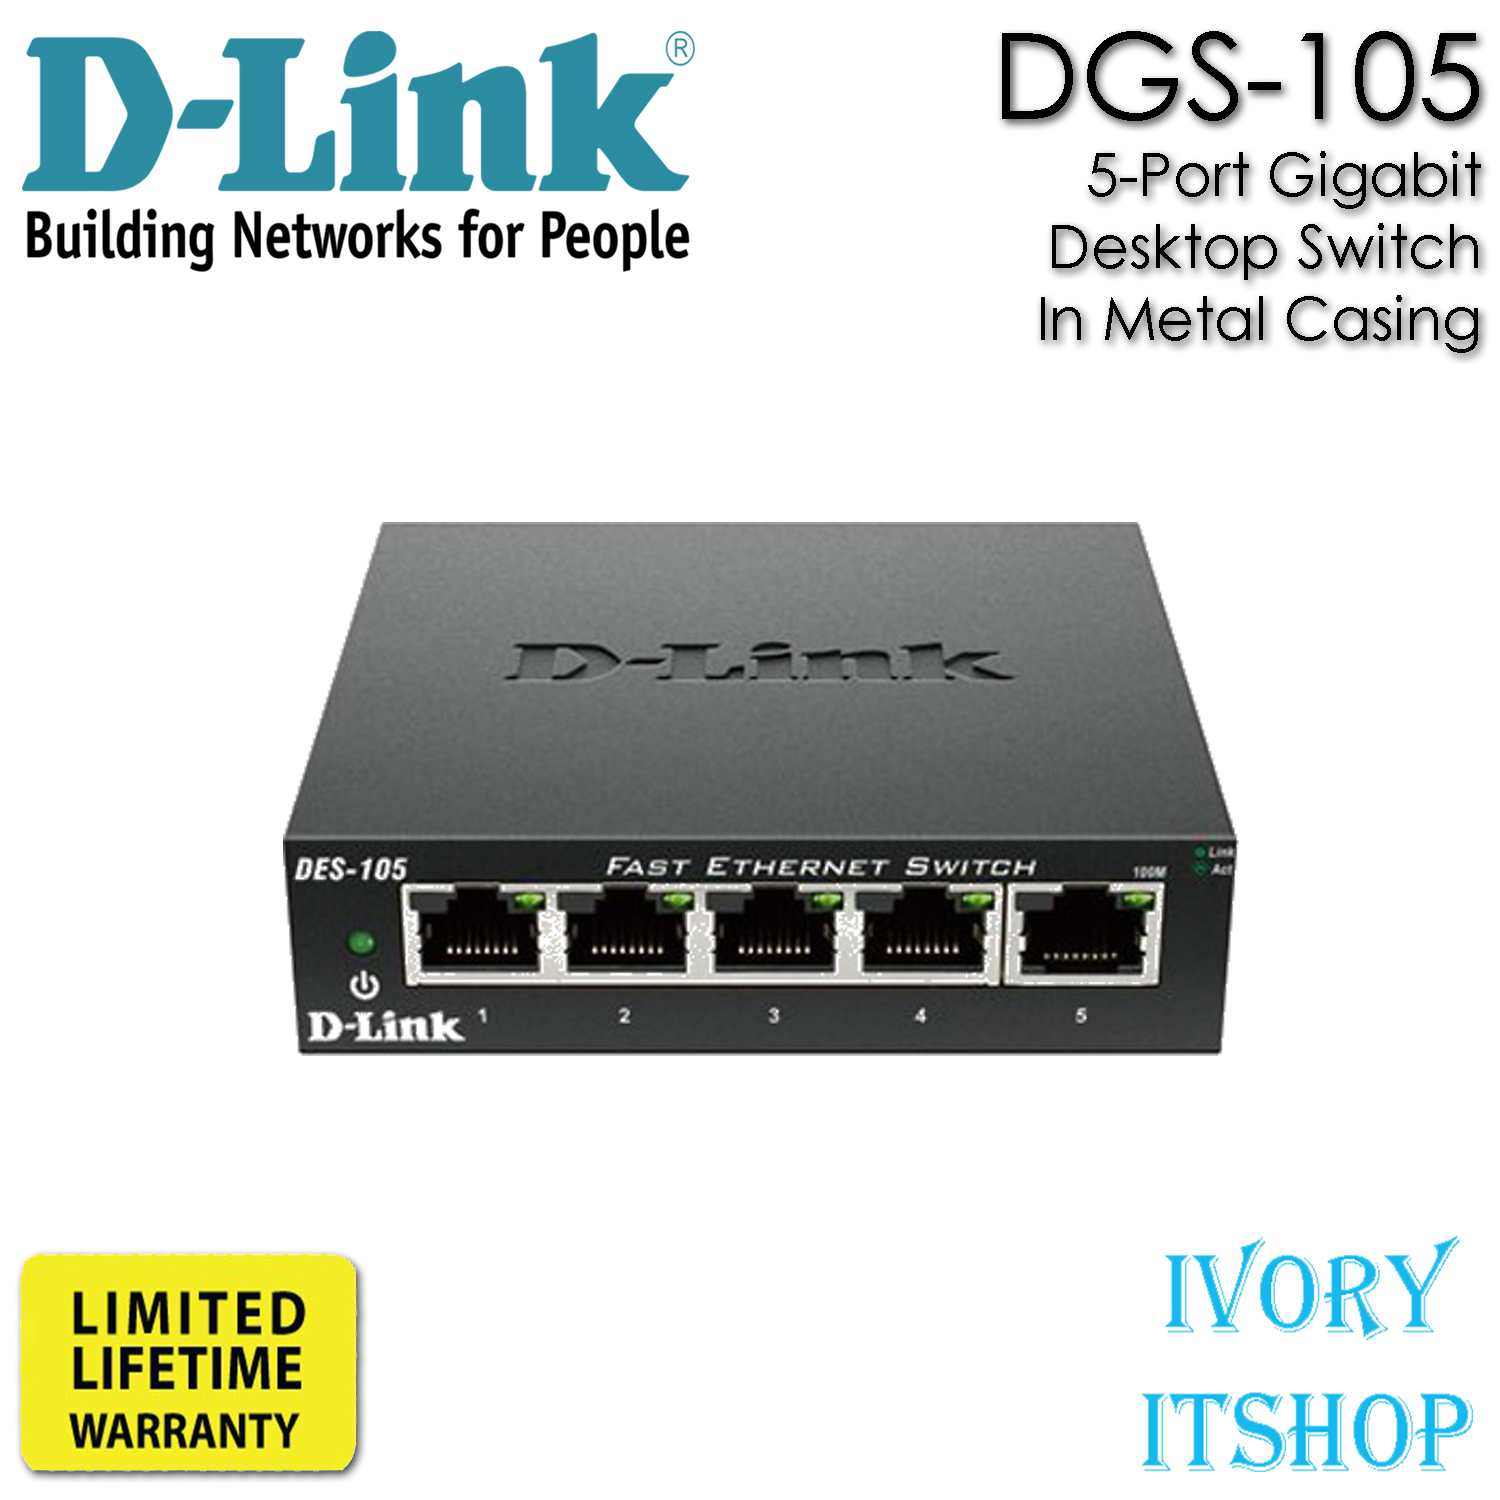 D-Link 5-Port Gigabit Desktop Switch In Metal Casing DGS-105